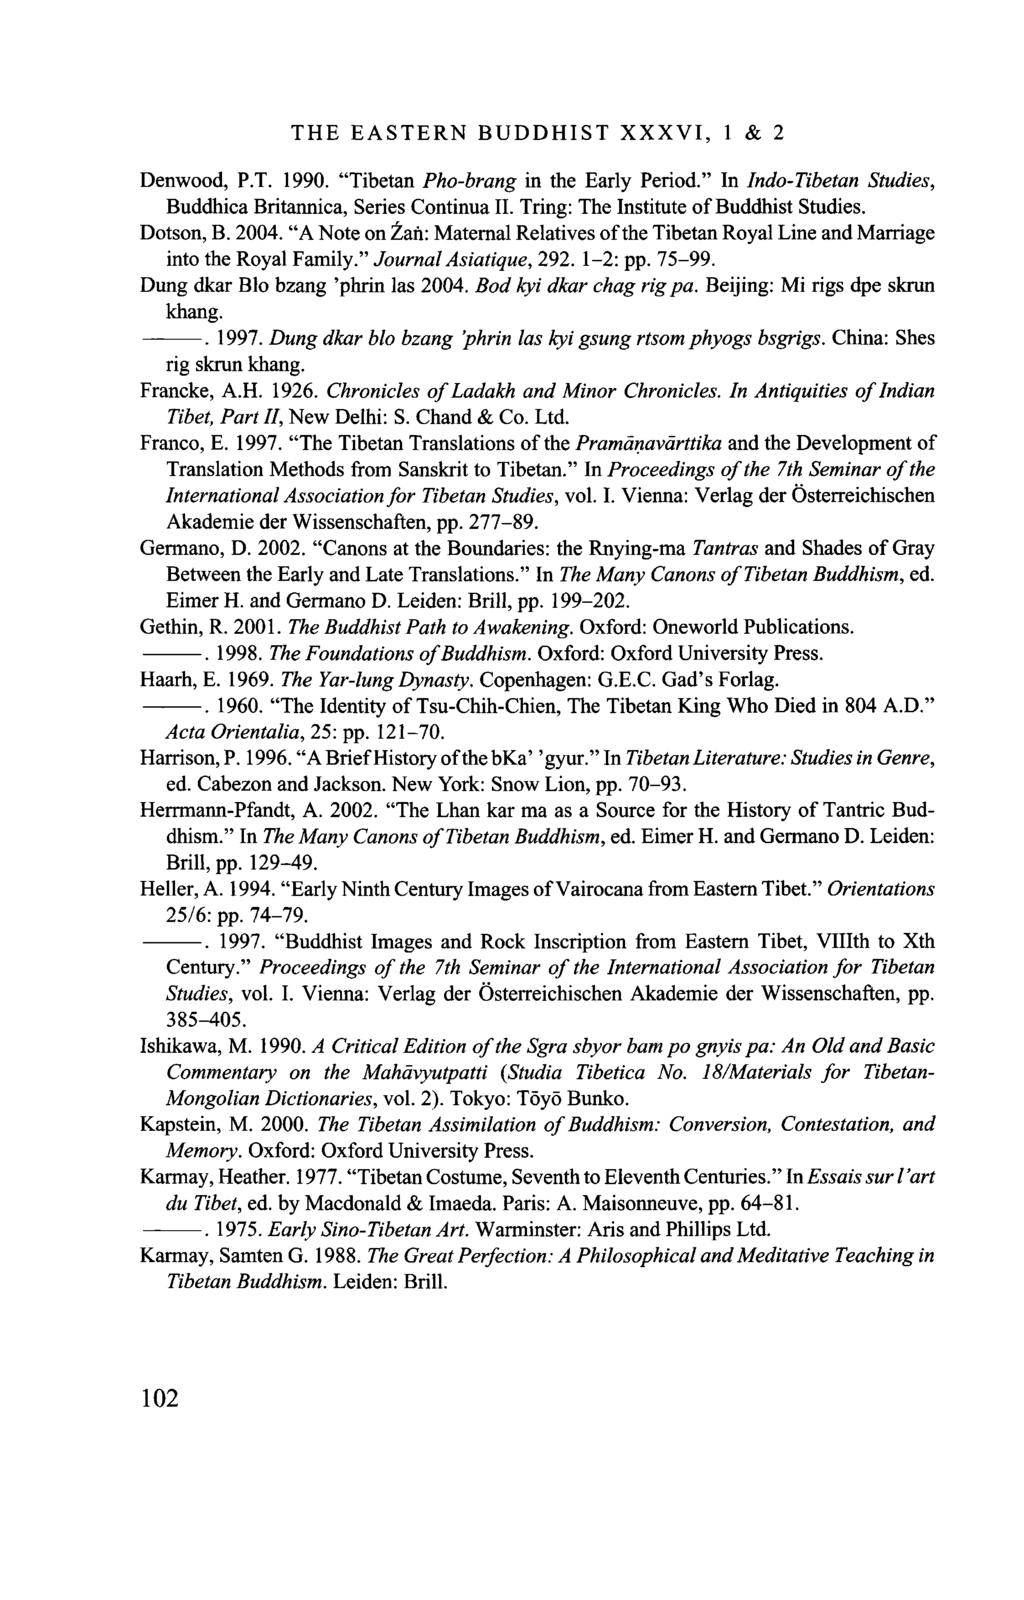 THE EASTERN BUDDHIST XXXVI, 1 & 2 Denwood, P.T. 1990. "Tibetan Pho-brang in the Early Period." In Indo-Tibetan Studies, Buddhica Britannica, Series Continua II.